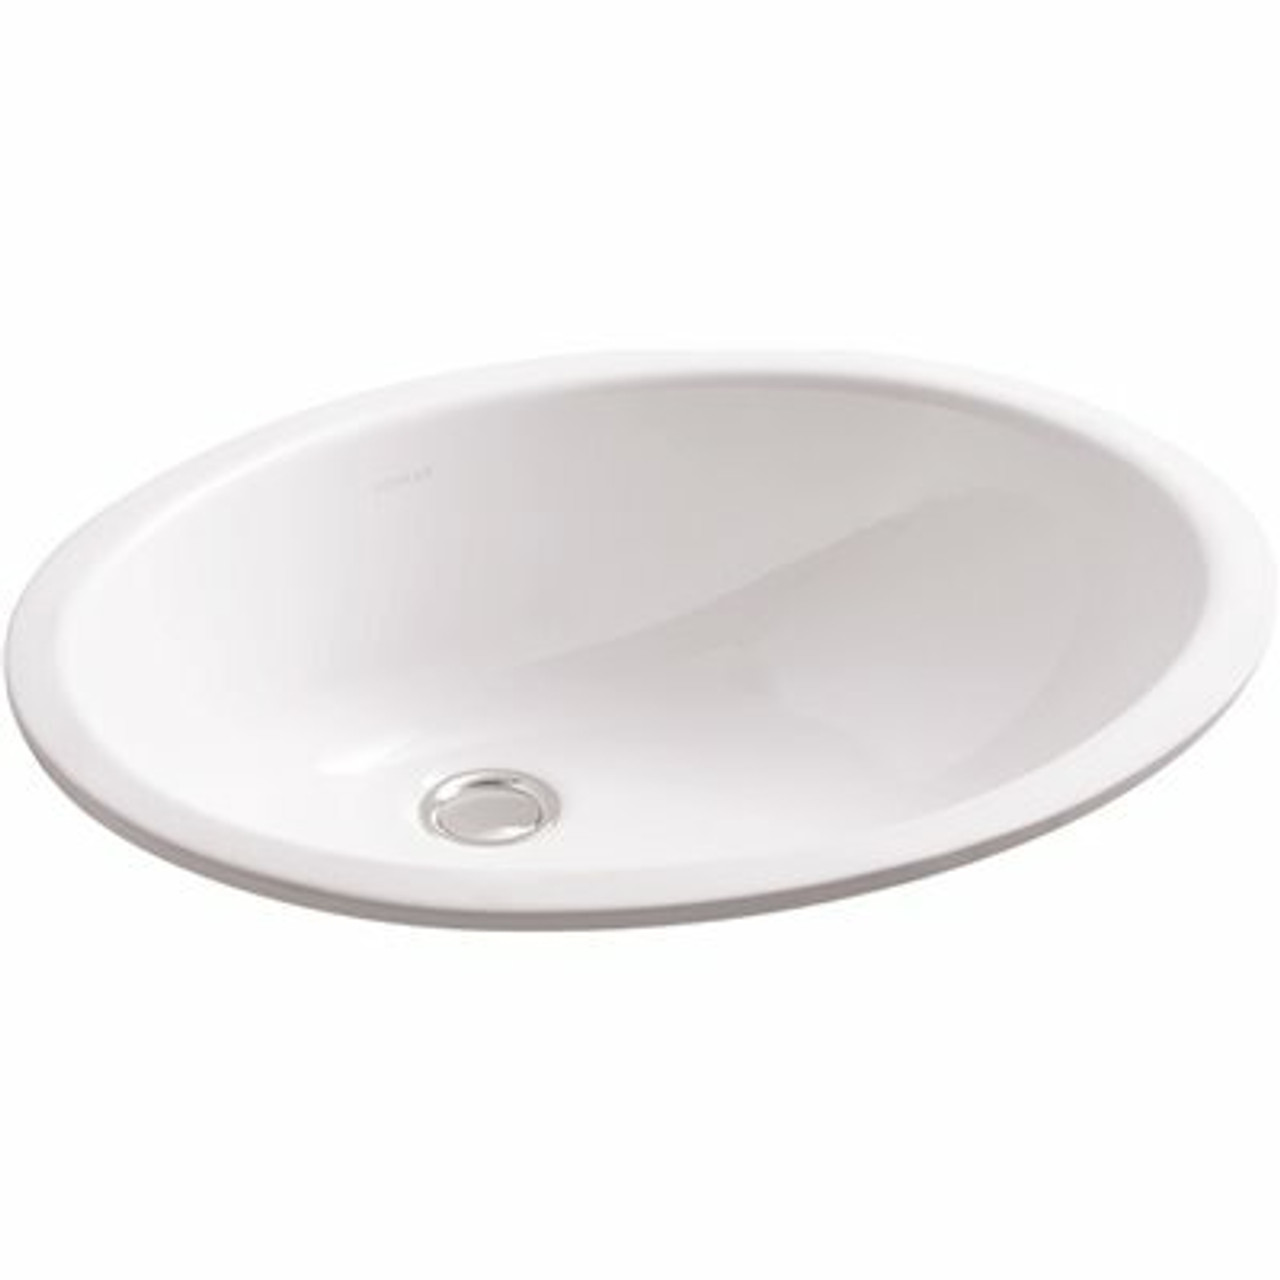 Kohler Caxton Vitreous China Undermount Bathroom Sink In White With Overflow Drain - 581264